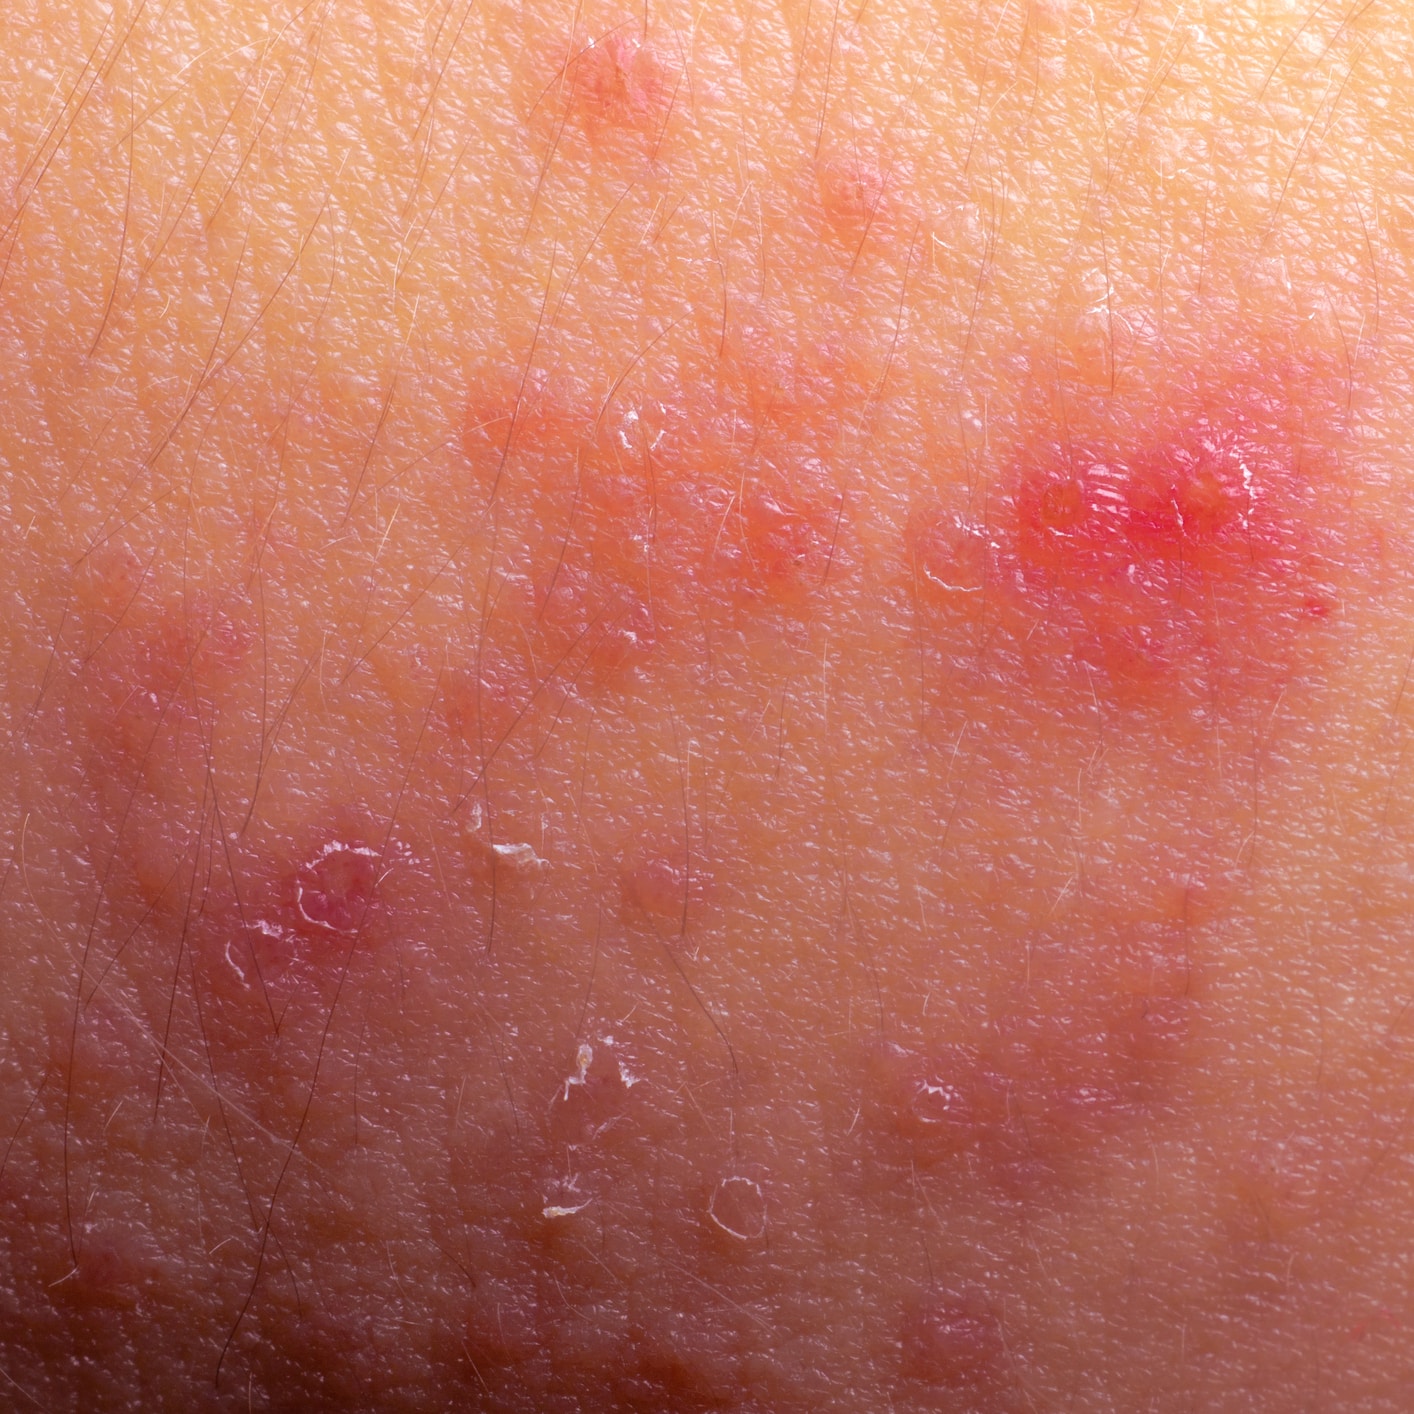 Washington DC Allergist: Eczema (atopic dermatitis)